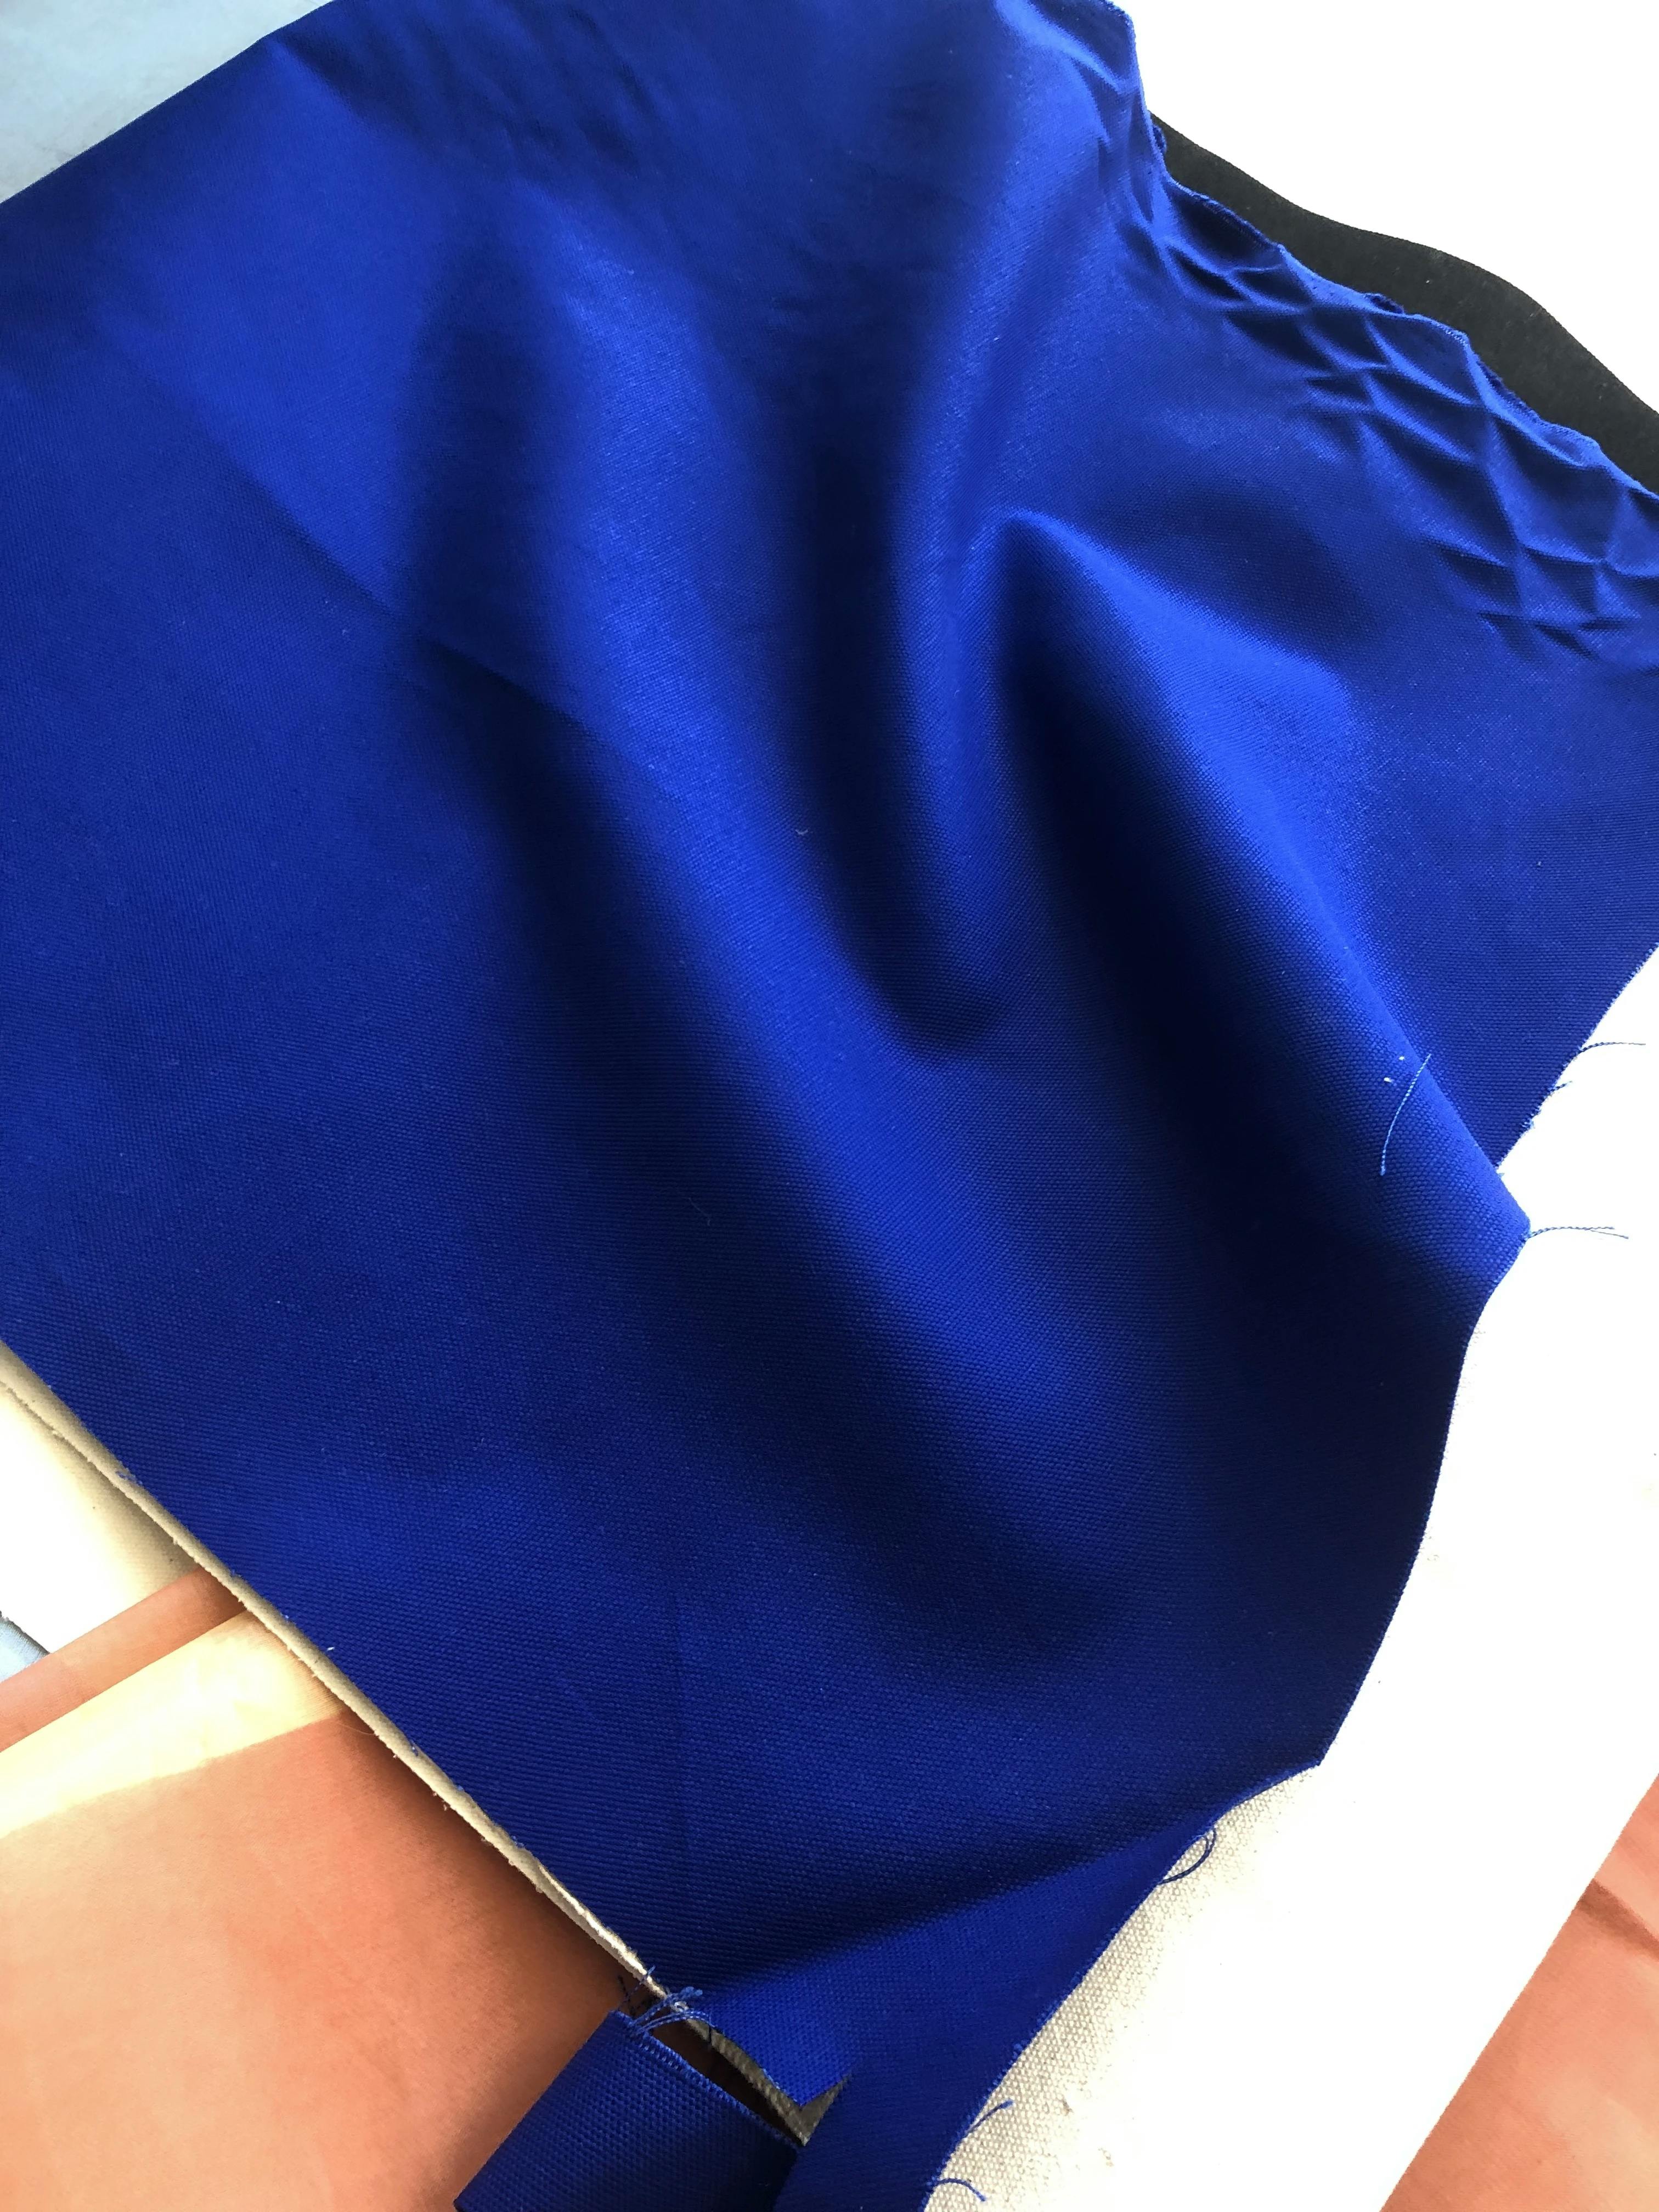 Blue fabric in artist Mada Viccasiau's studio.